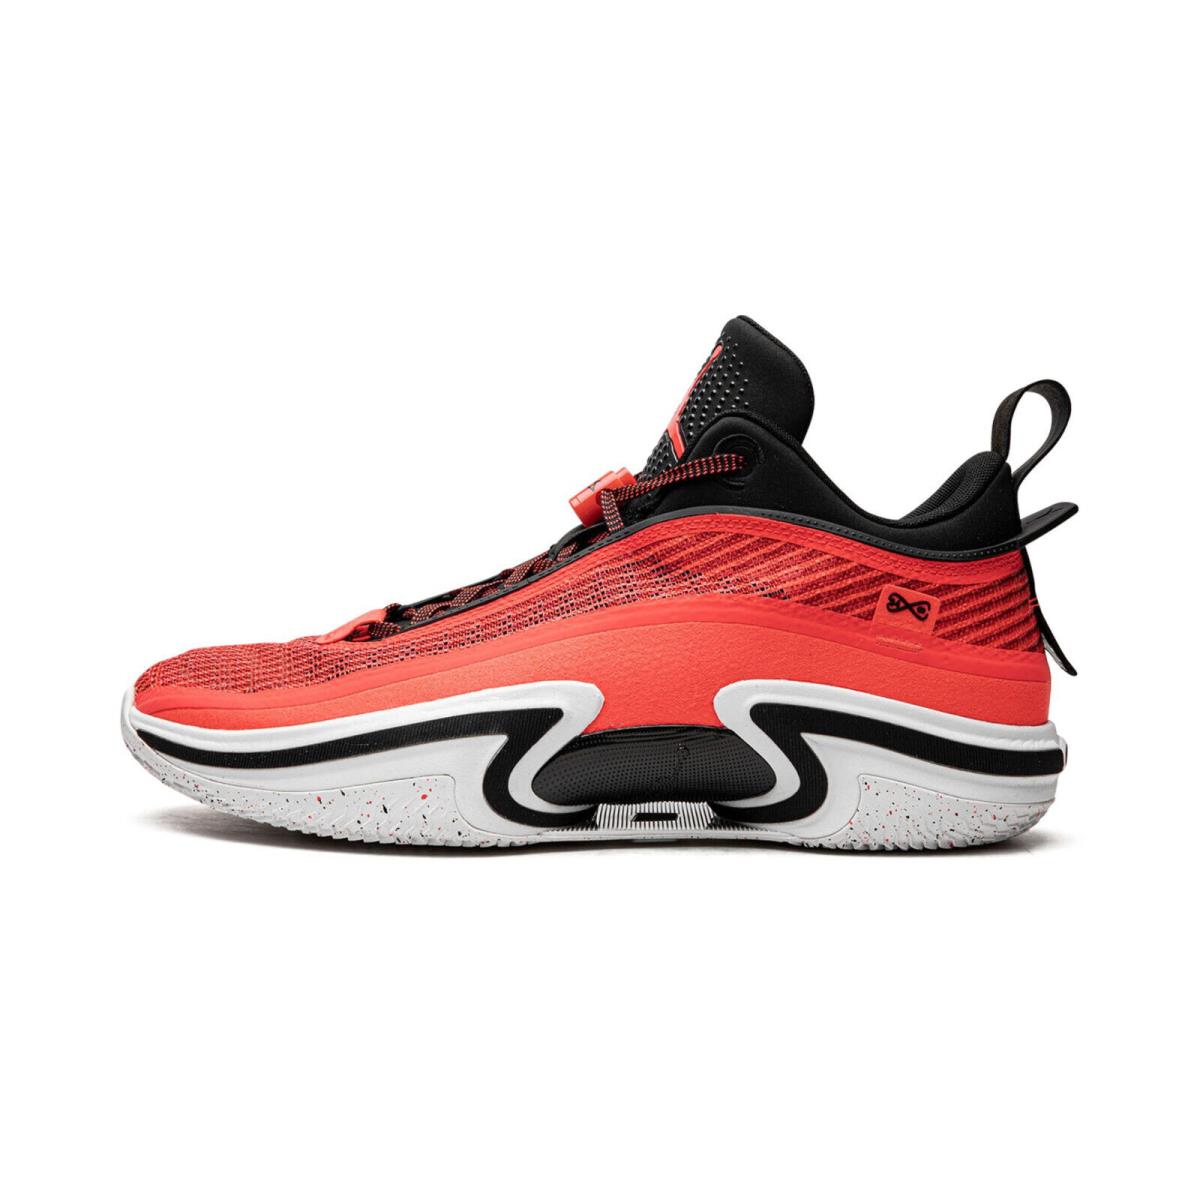 Men Nike Jordan 36 Xxxvi Basketball Shoes Size 8 Infrared Red Black DH0833 660 - Red